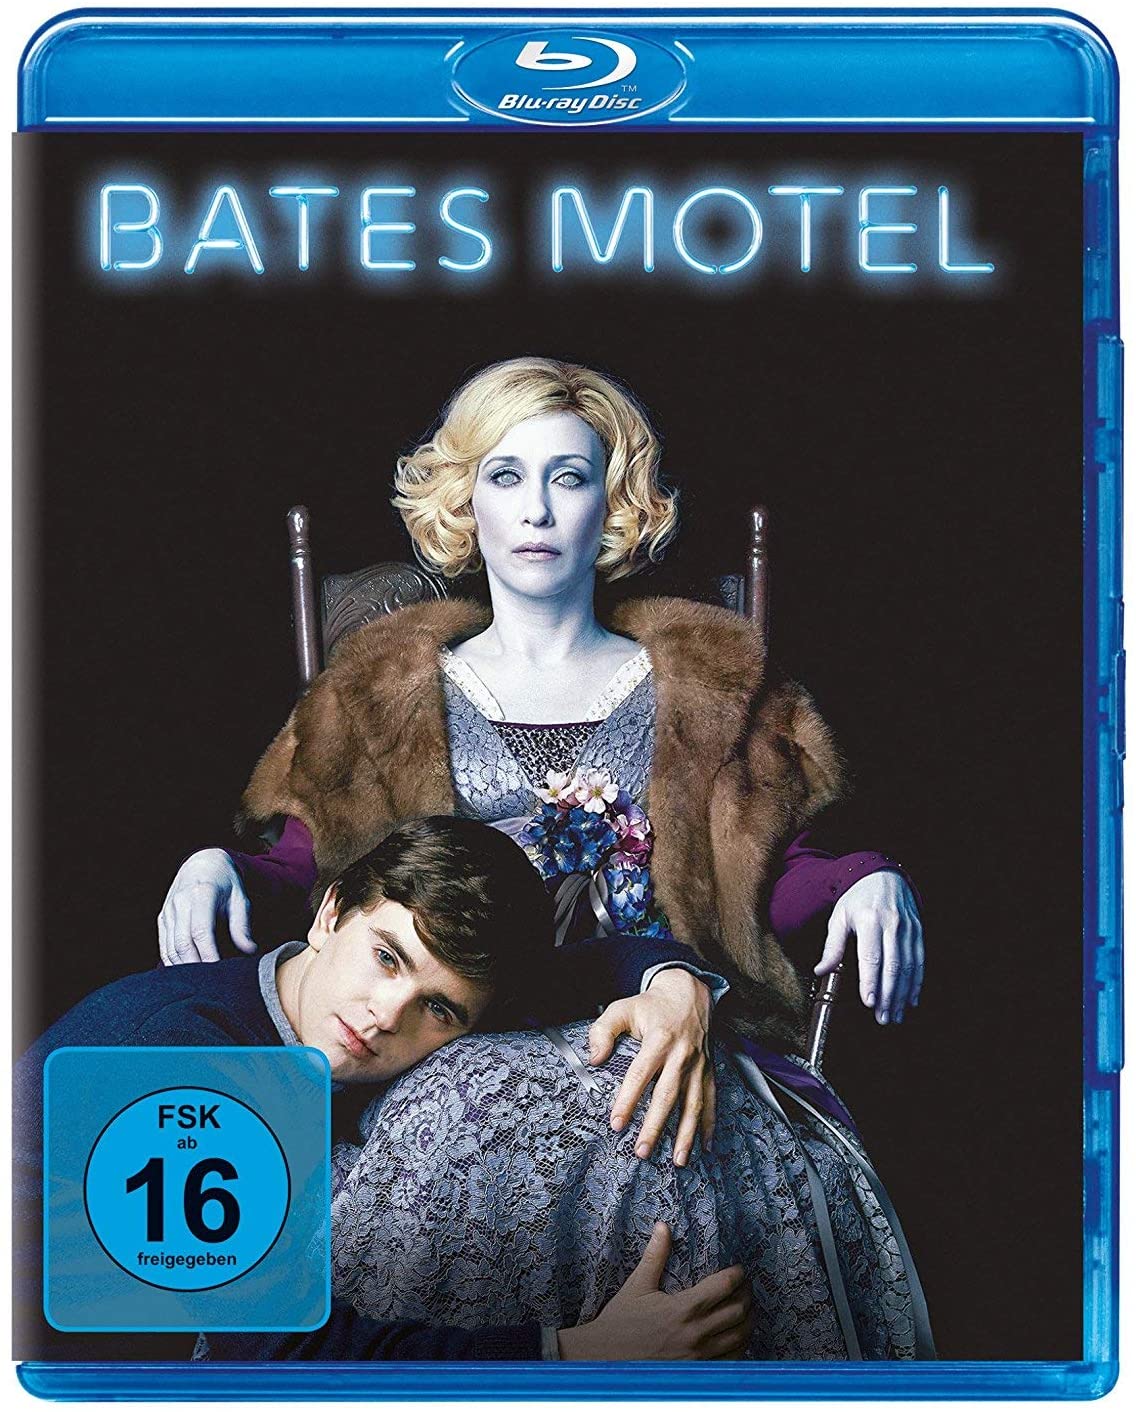 Bates Motel: Season 5 (Blu-ray)